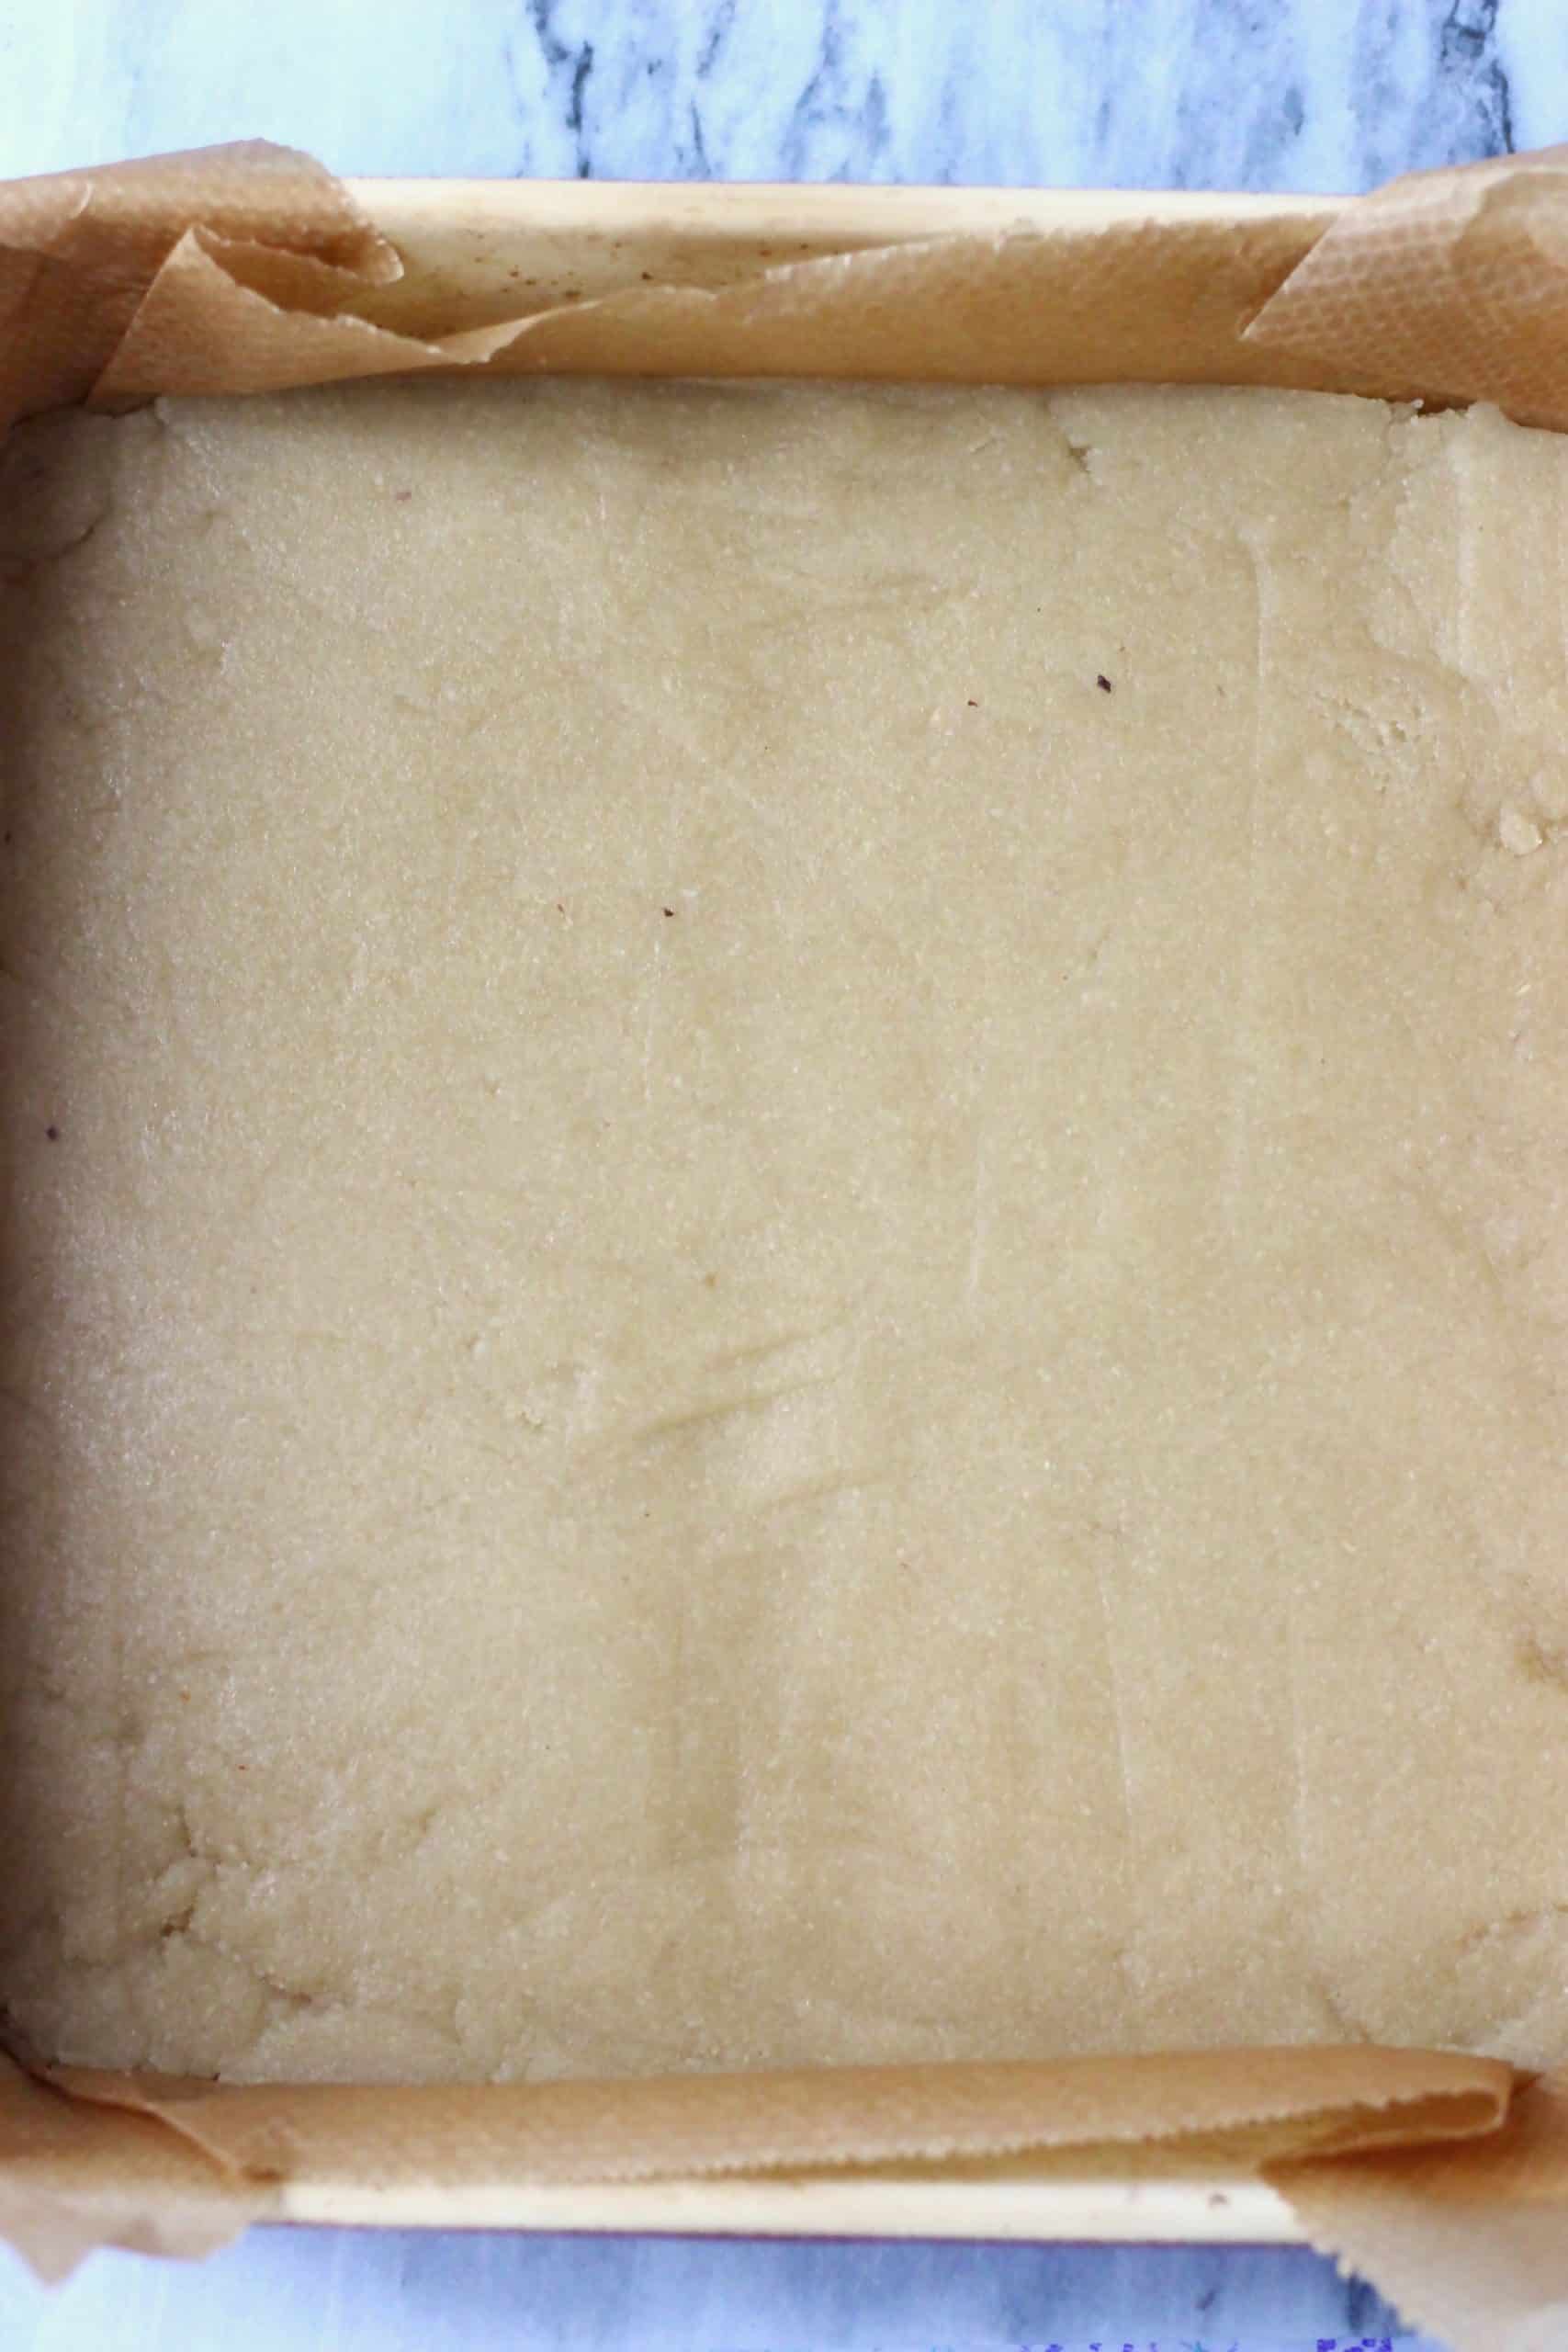 Raw gluten-free vegan crumble bar dough in a square baking tin